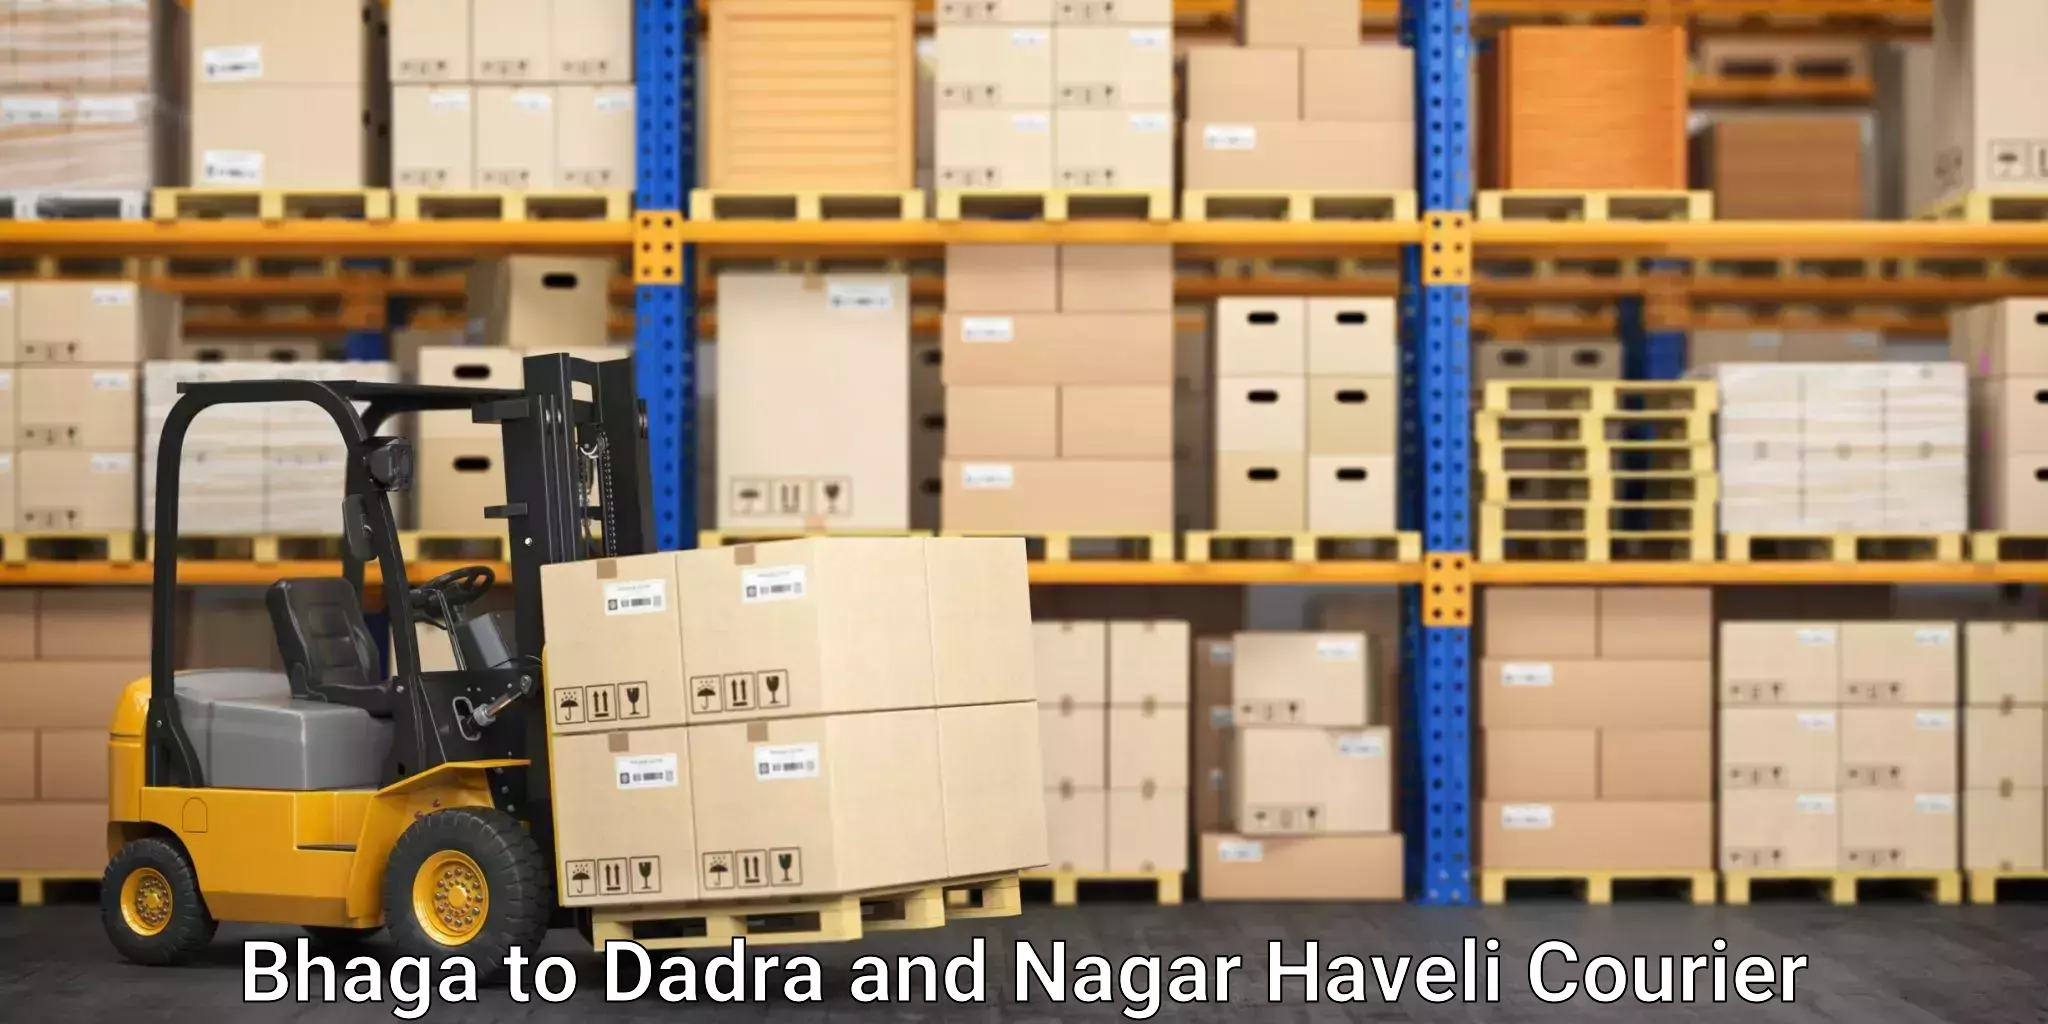 Customizable shipping options Bhaga to Dadra and Nagar Haveli